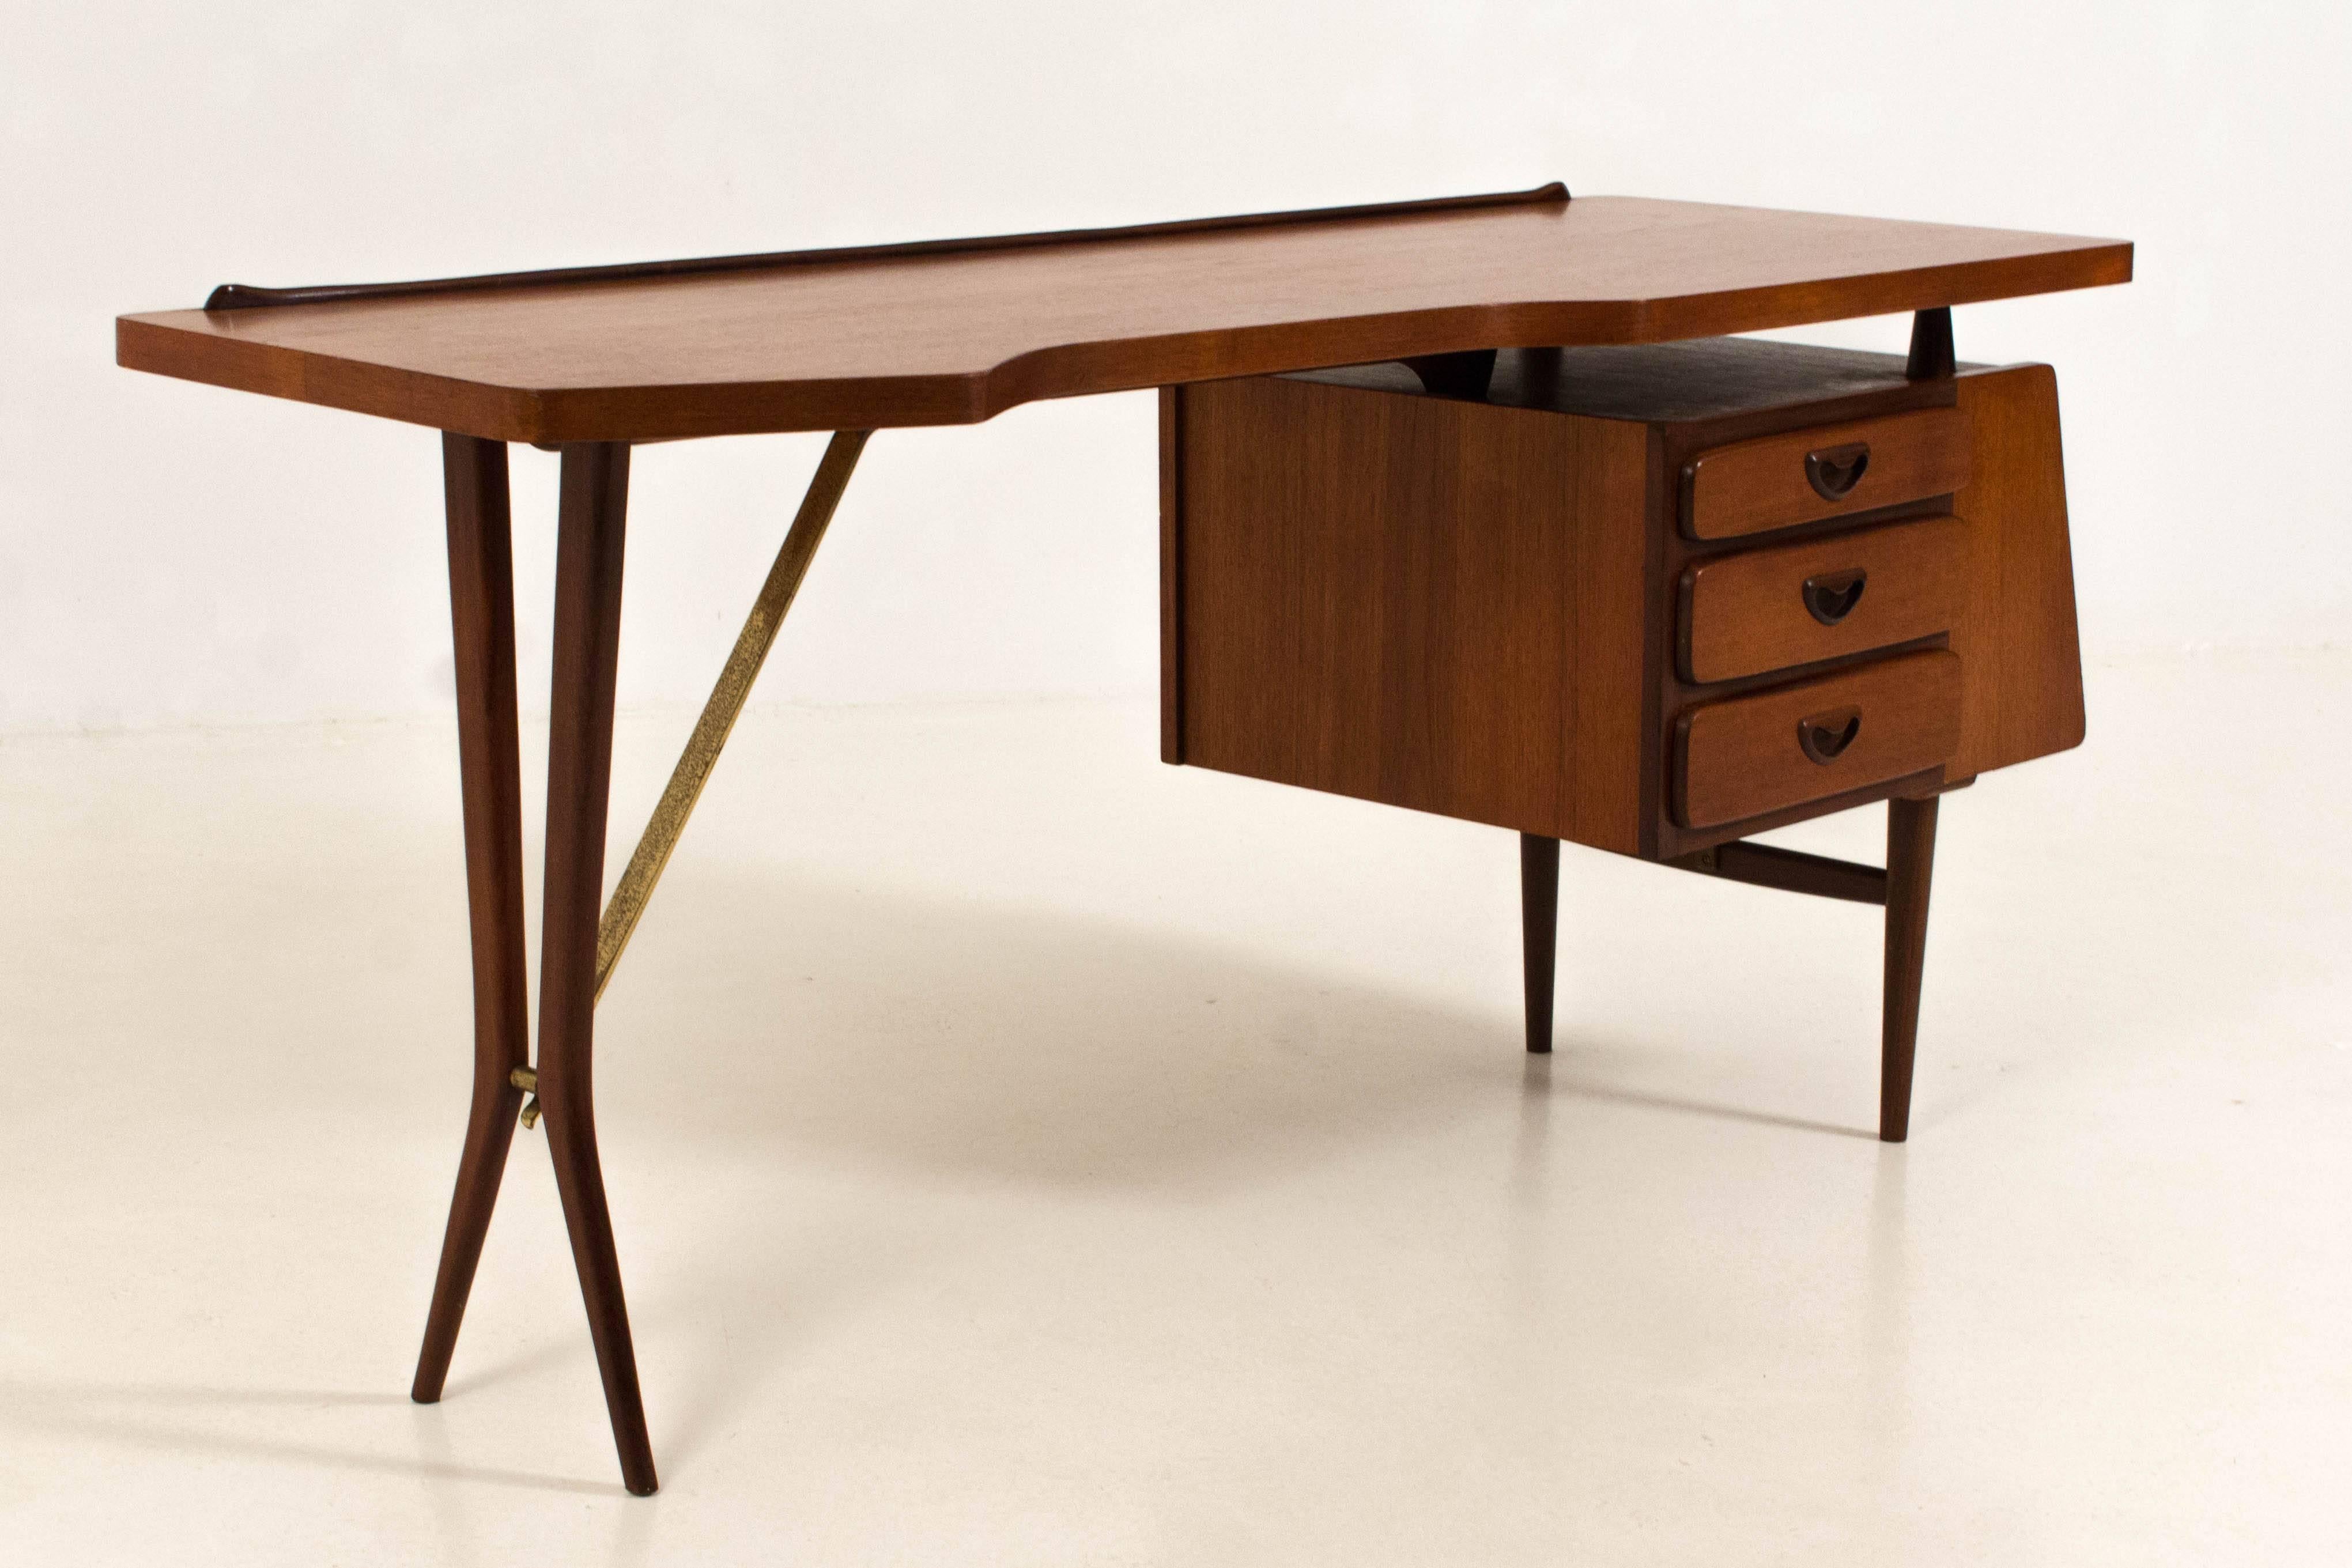 Dutch Iconic Mid-Century Modern Desk by Louis Van Teeffelen for Webe, 1959